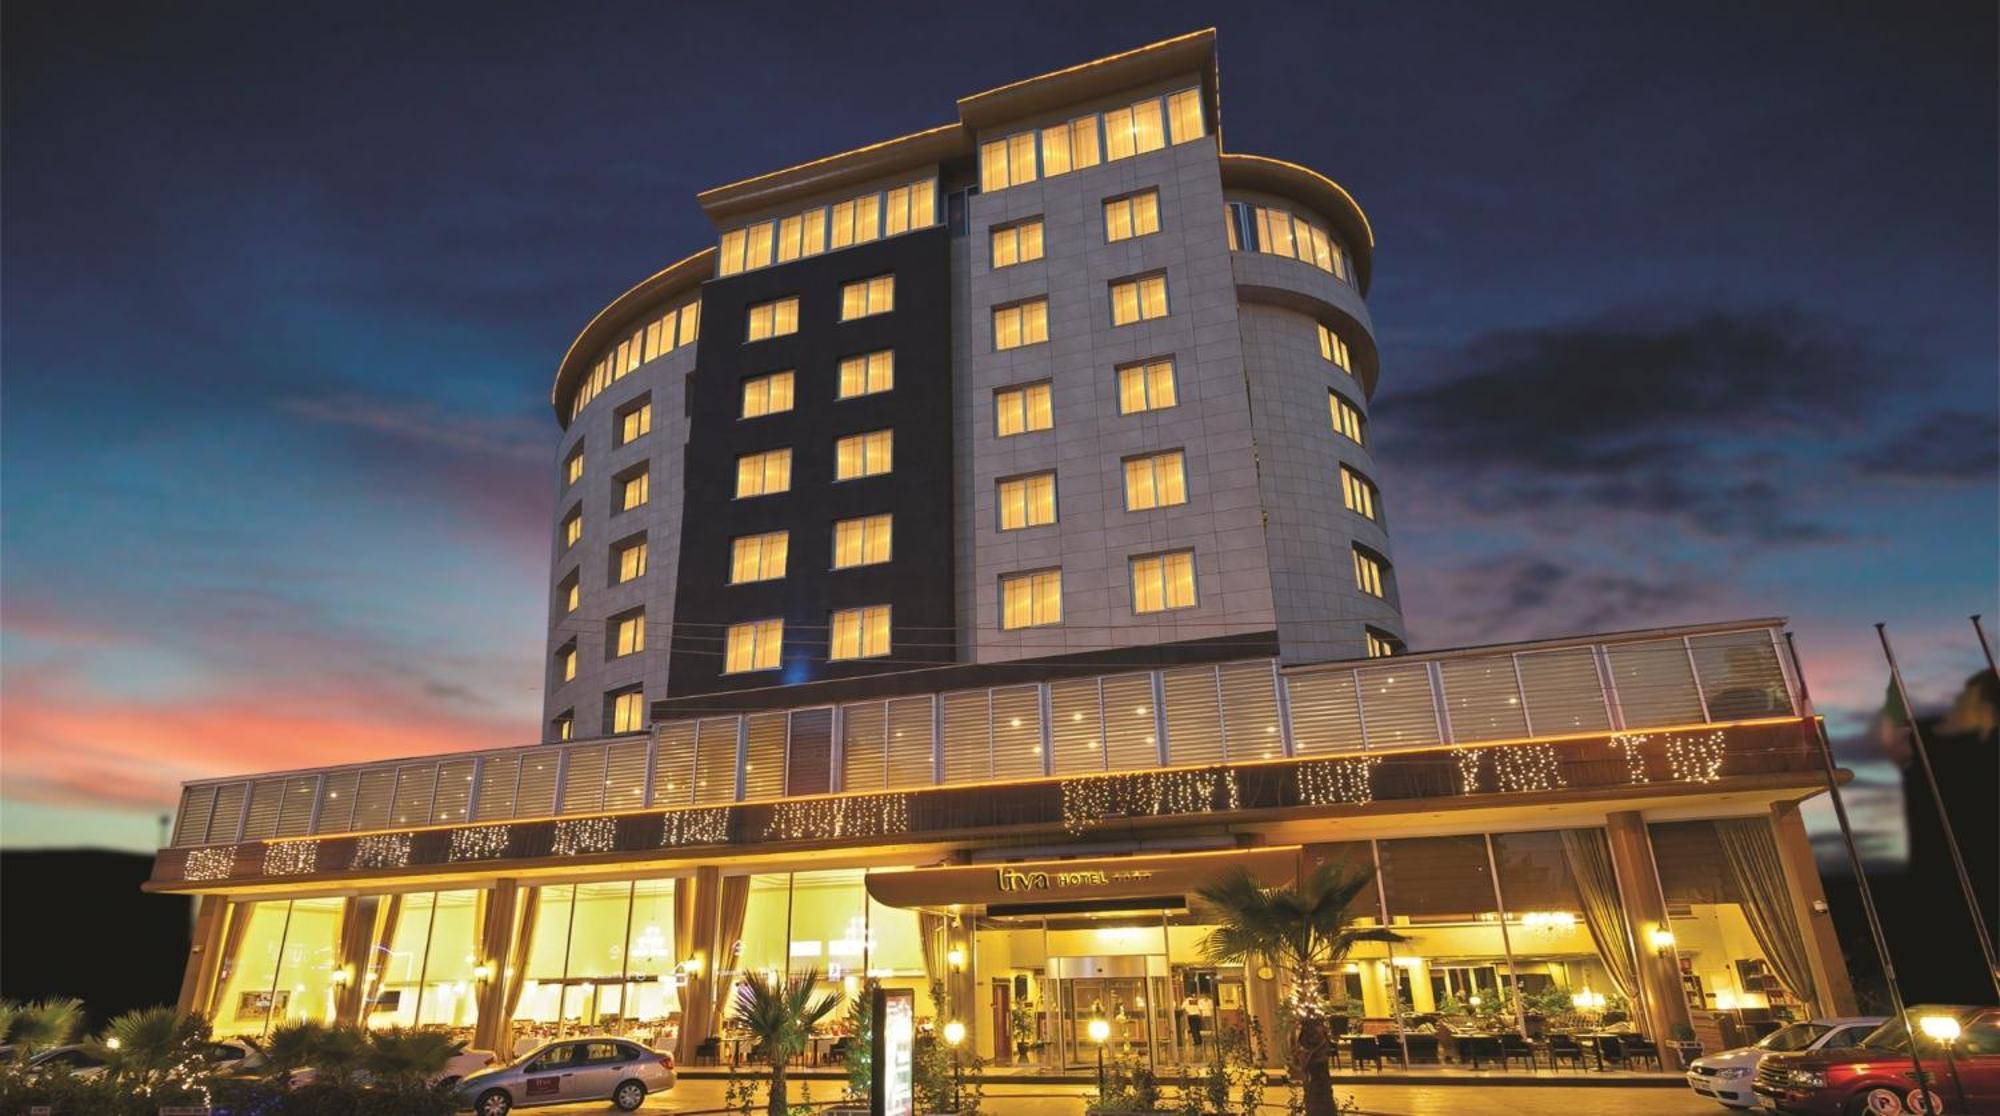 Yucesoy Liva Hotel Spa & Convention Center Mersin Mersin  Exterior photo